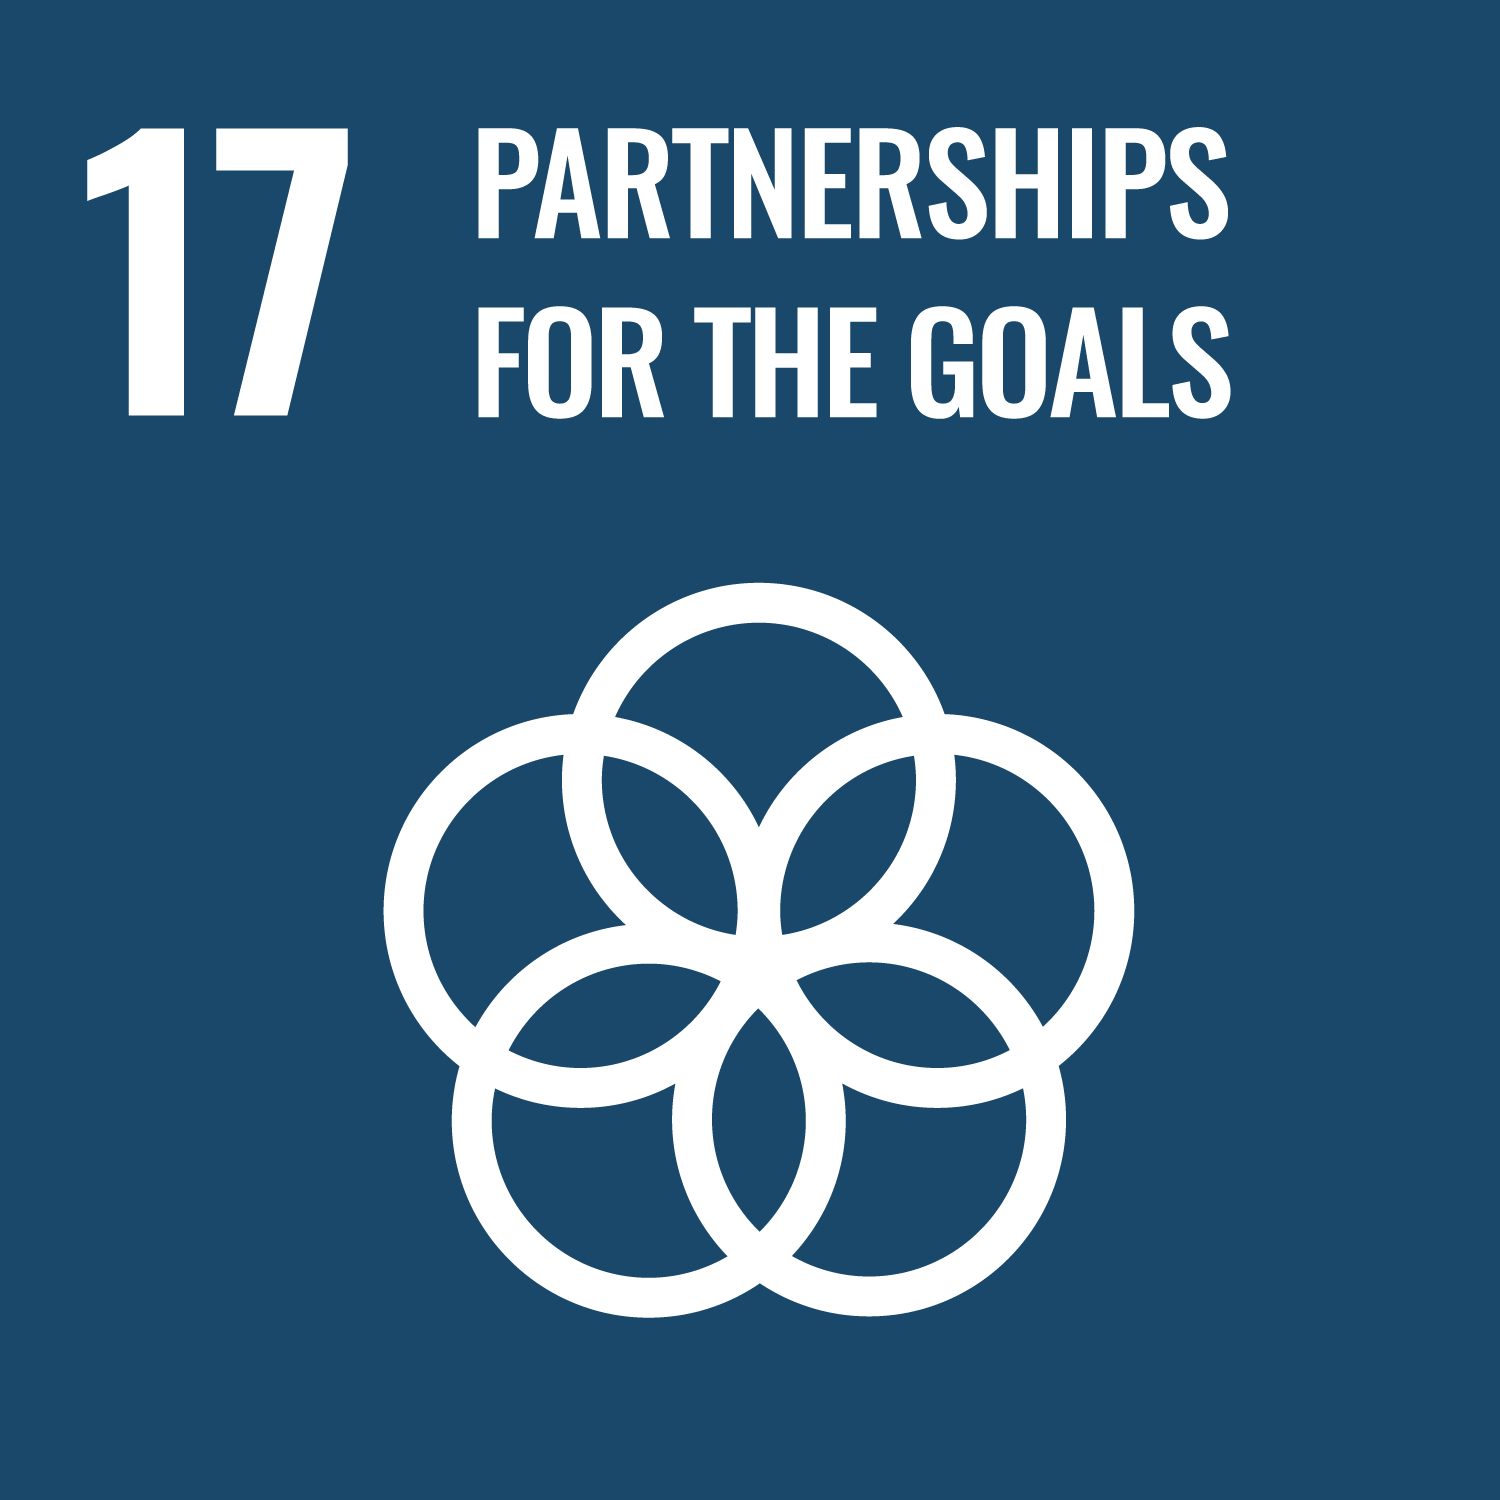 Goal 17: Partnership for the goals